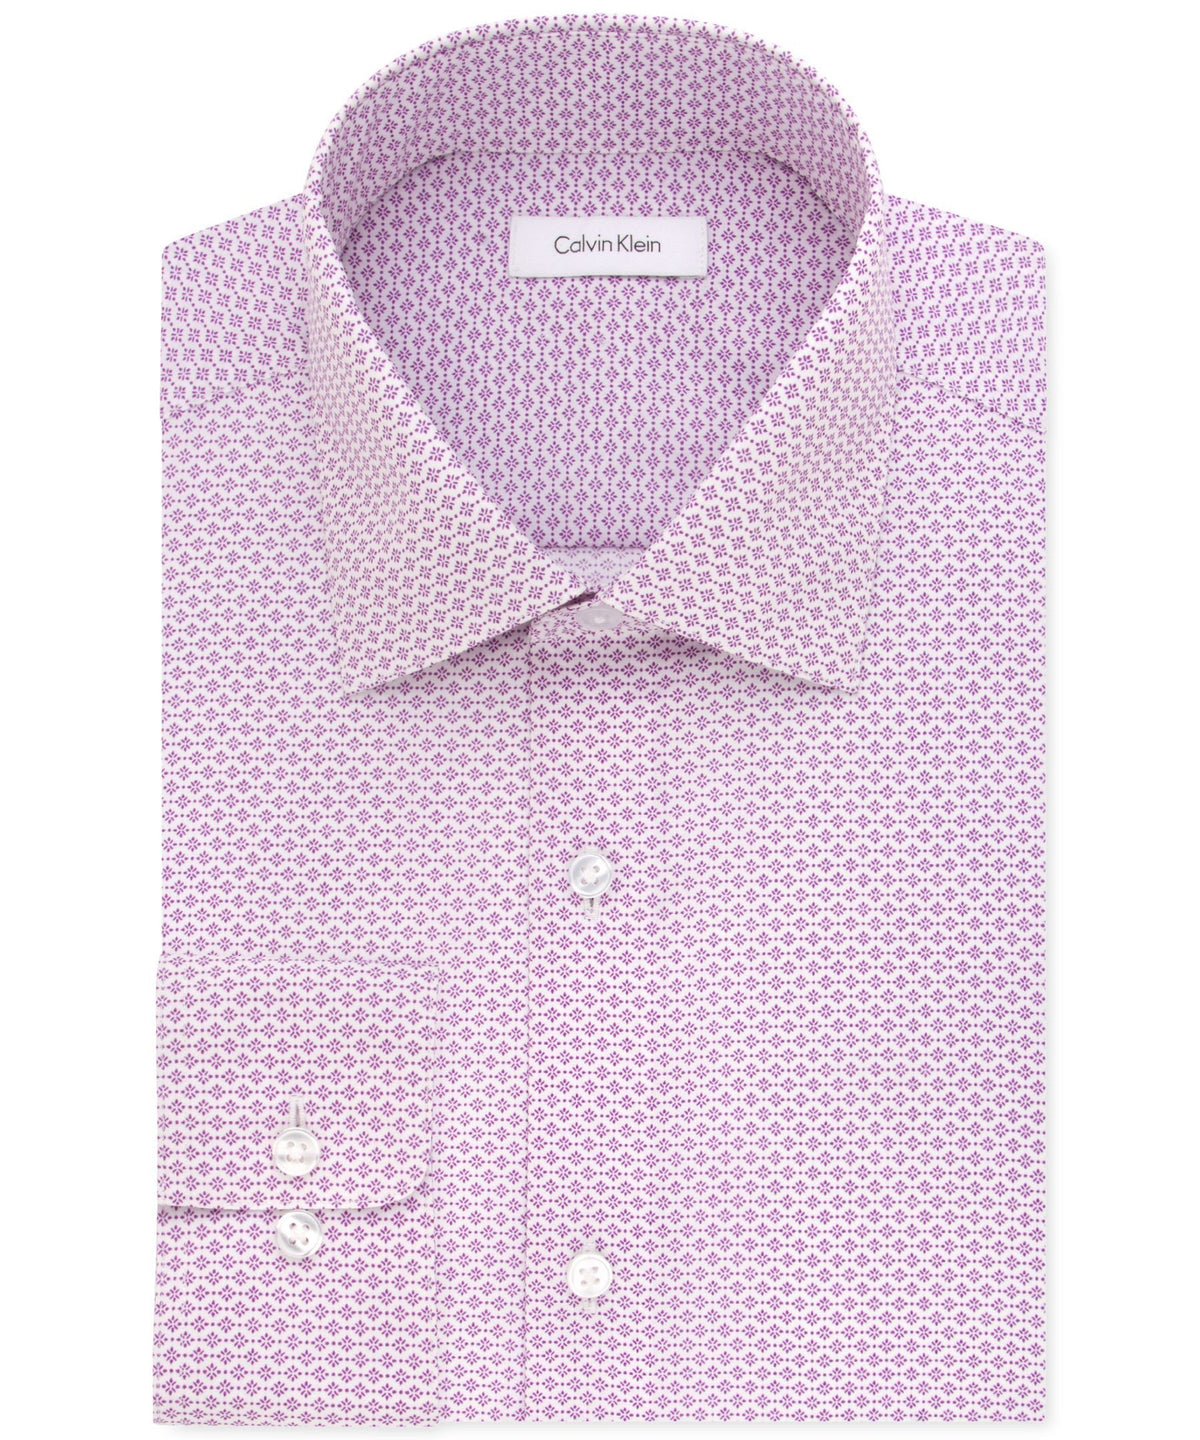 Calvin Klein STEEL Classic/Regular Fit Non-Iron Performance Purple Print Dress Shirt